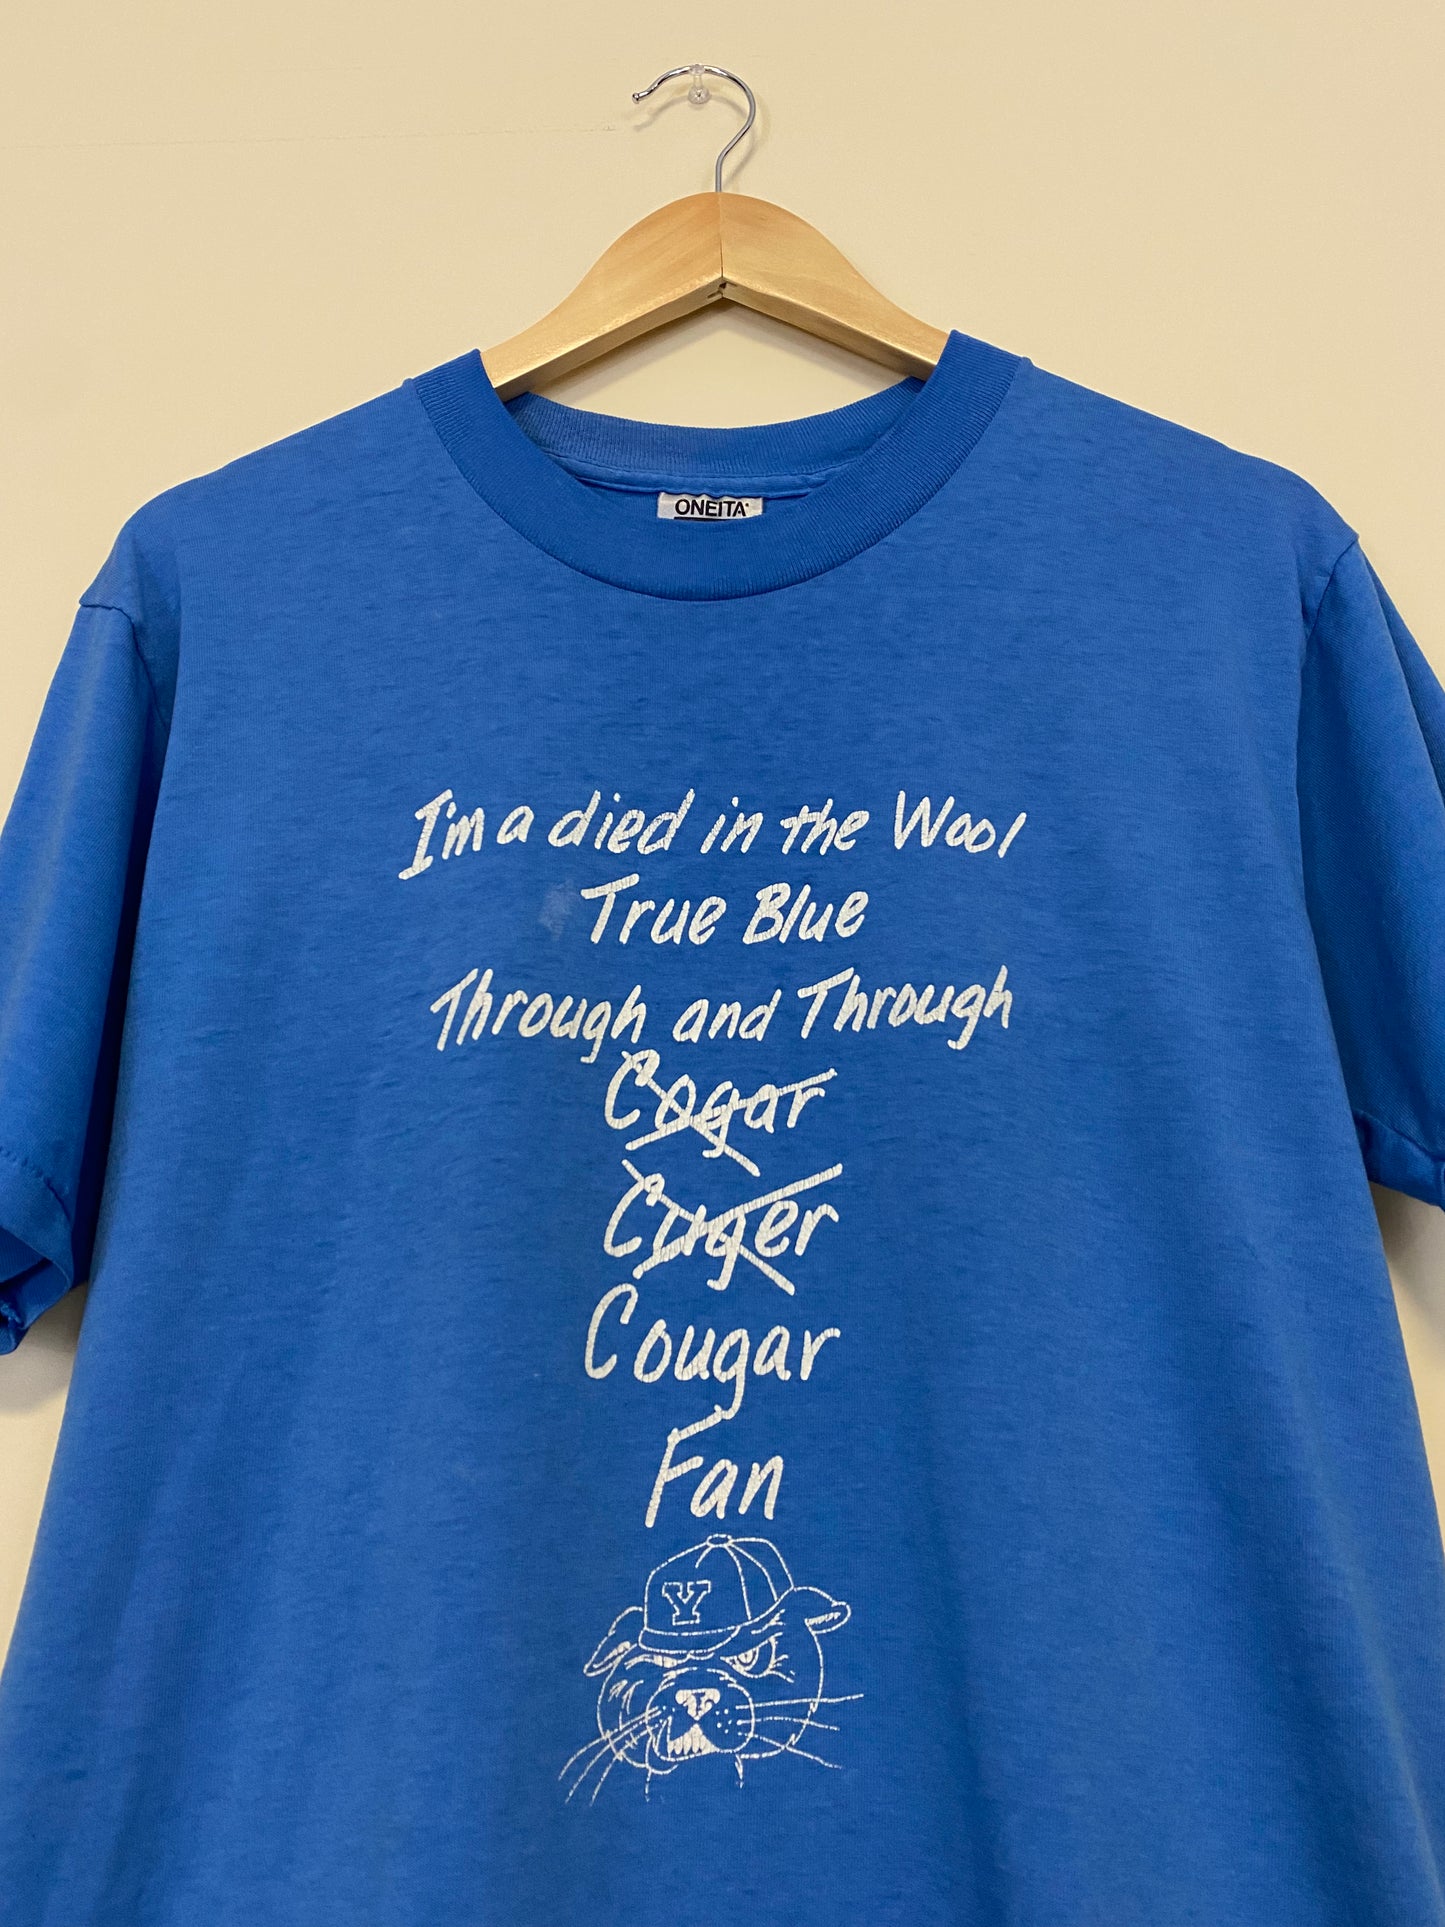 Brigham Young University Cougars Fan T-Shirt